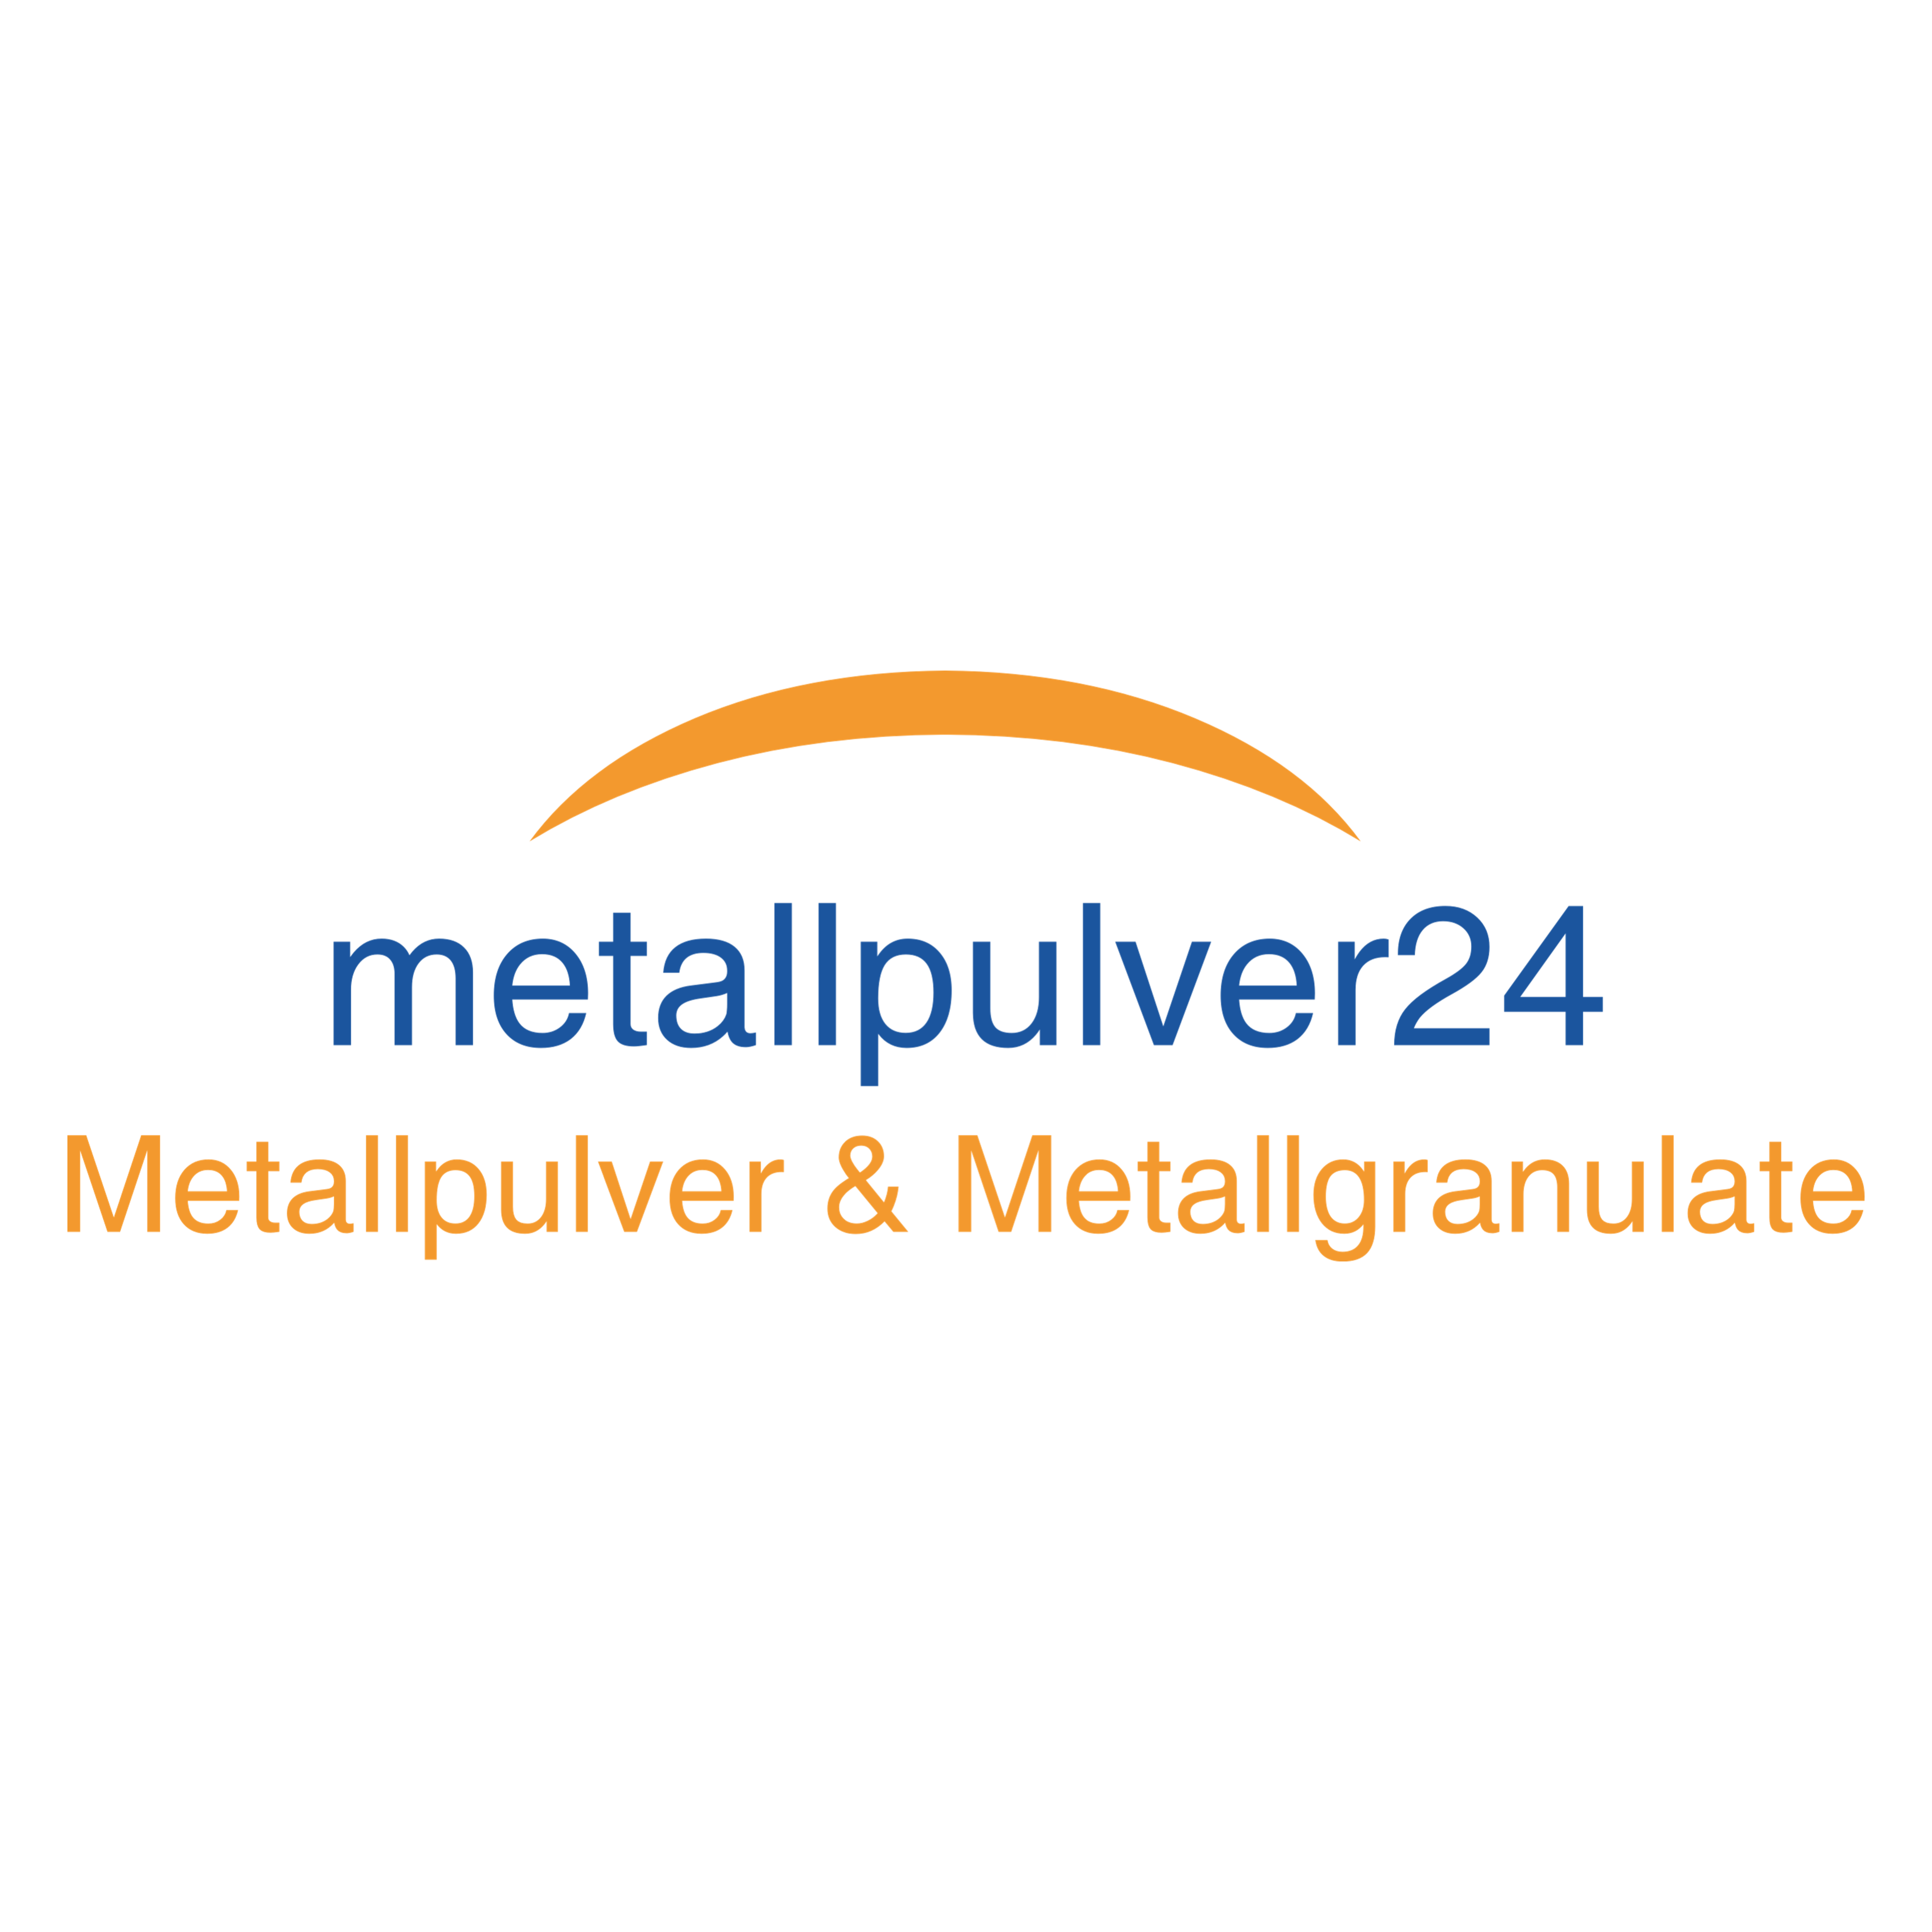 metallpulver24